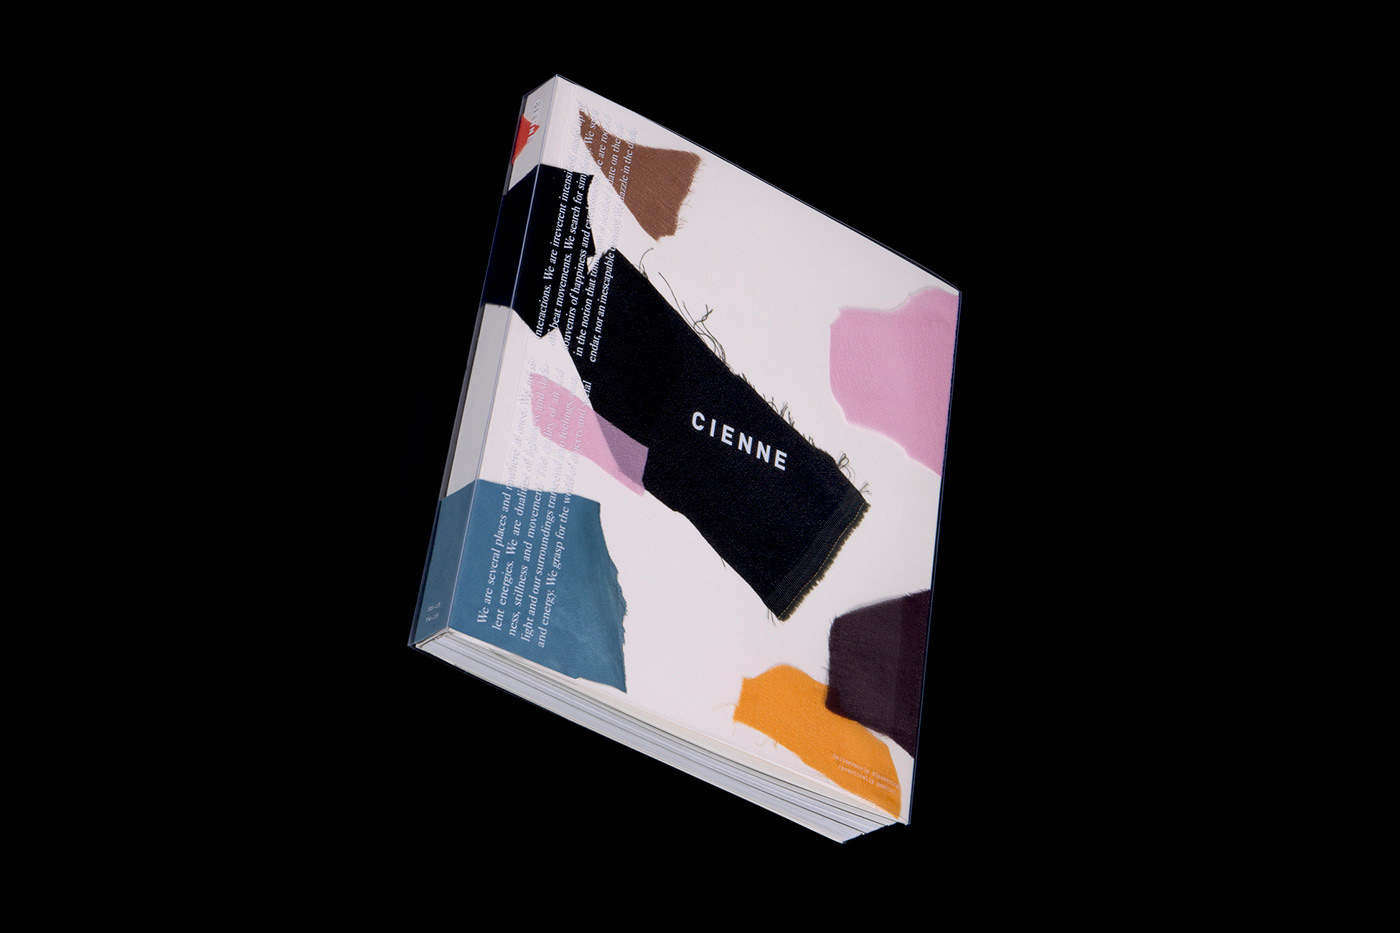 Cienne: Brand Book on Behance